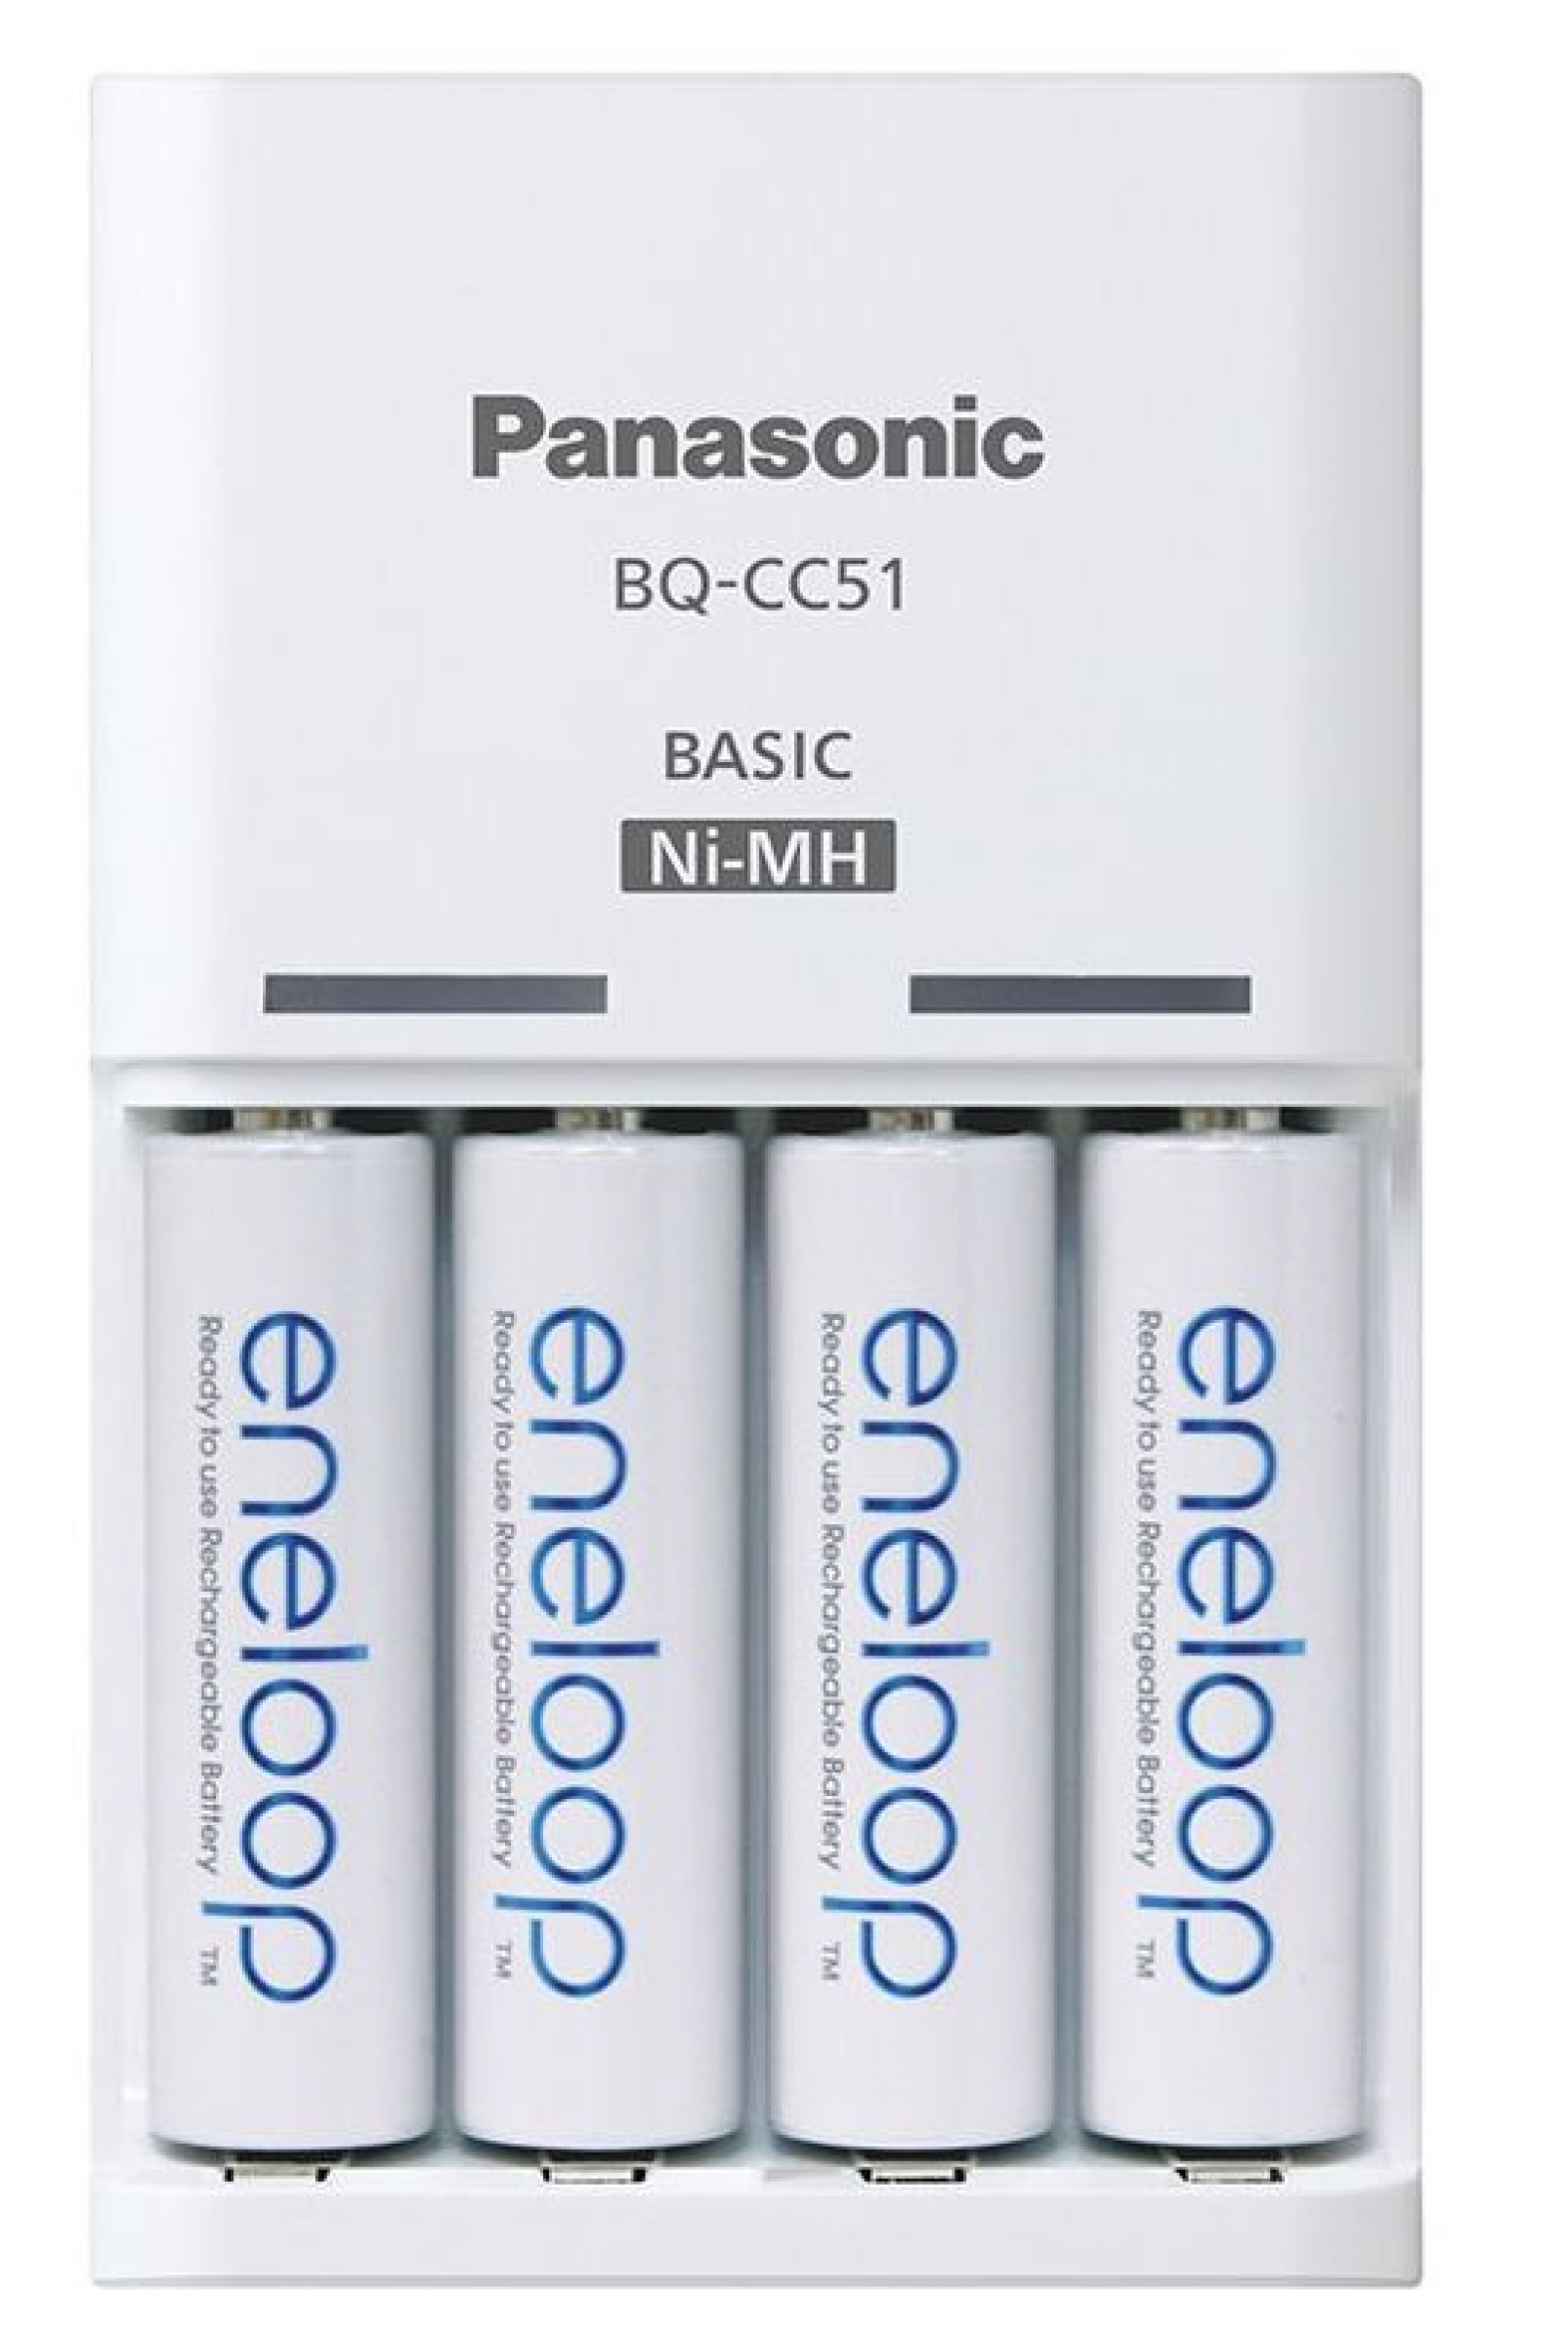 Panasonic eneloop Basic Charger Ladegerät BQ-CC51 inkl. 4 AA 2000 mAh R2U